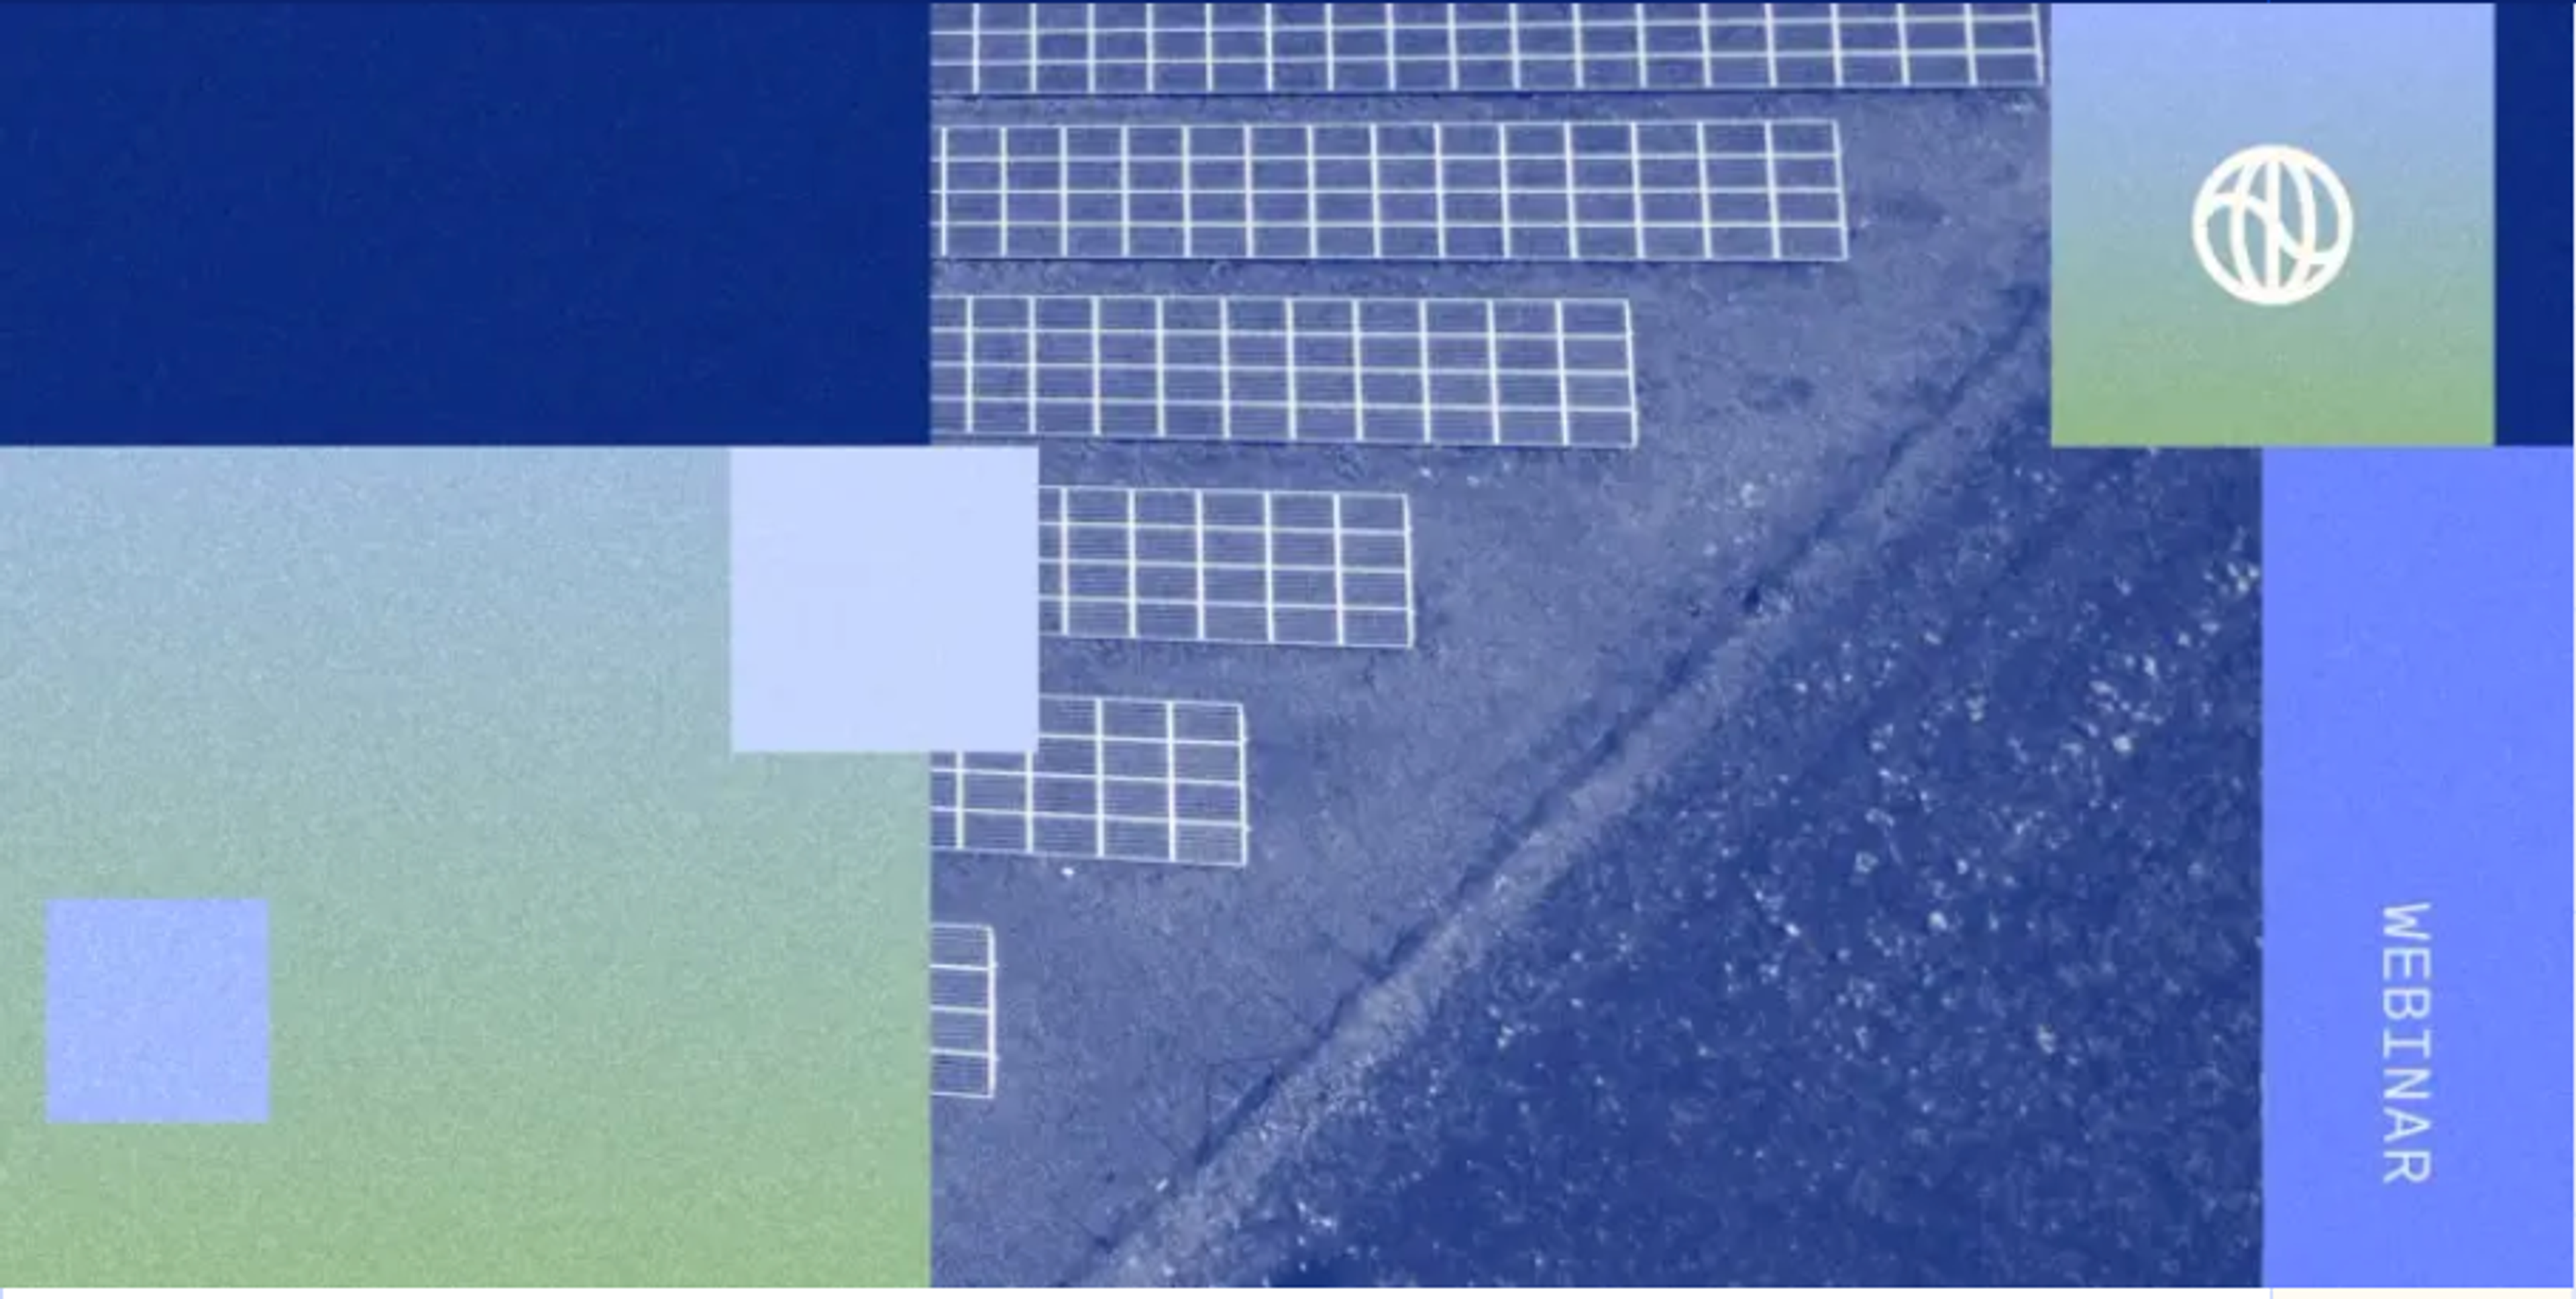 Webinar image with solar panels